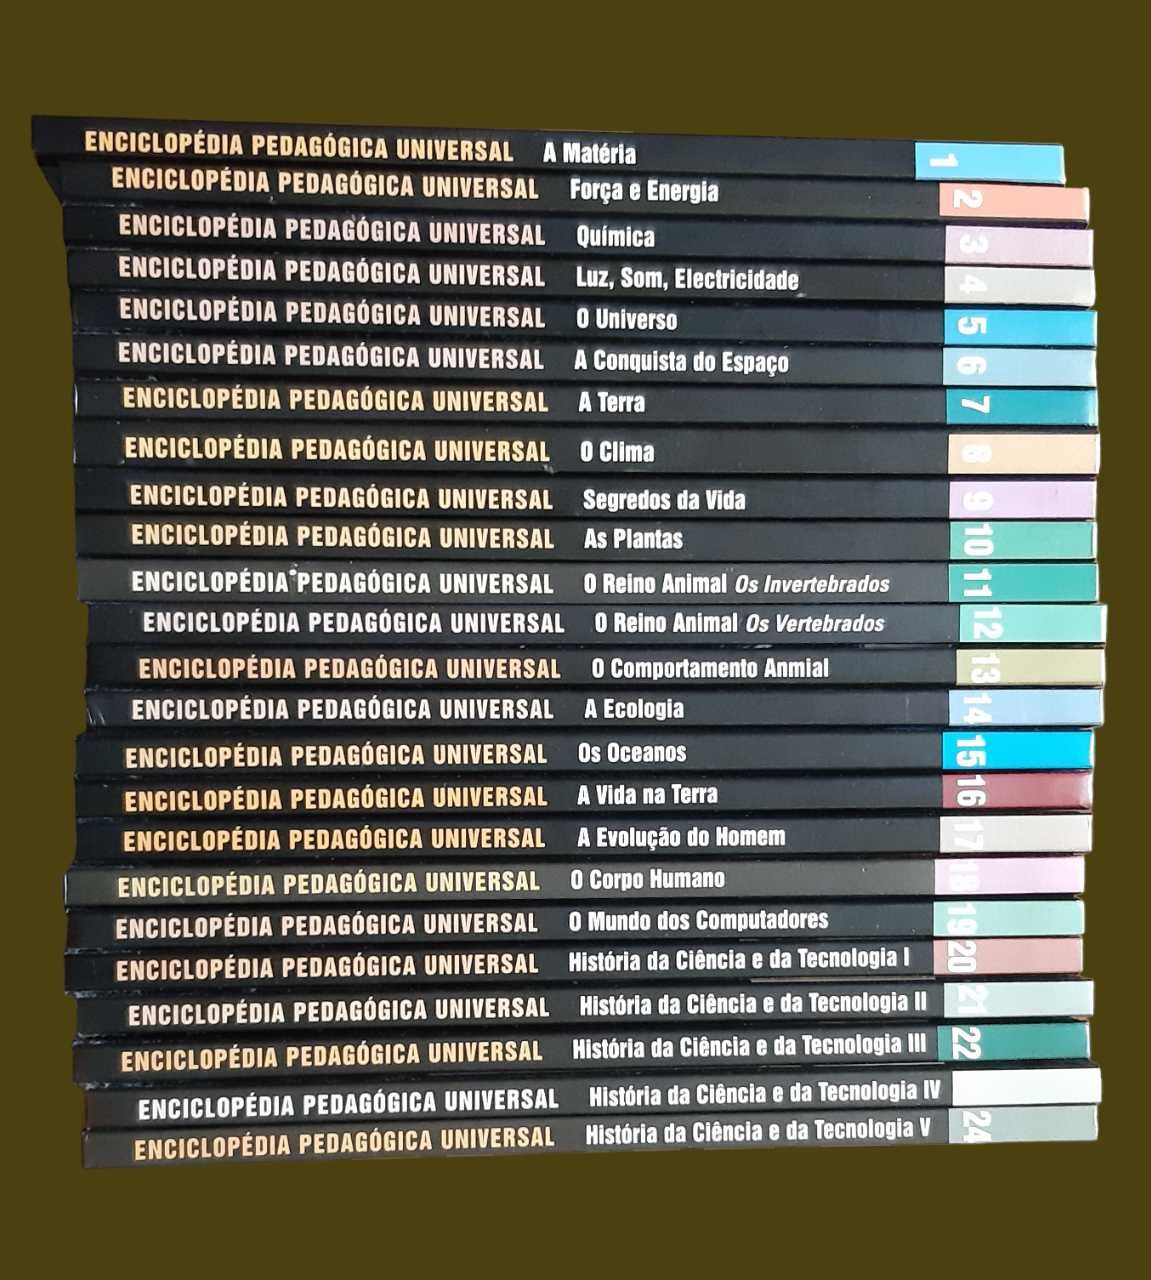 Enciclopédia Pedagógica Universal composta por 24 volumes